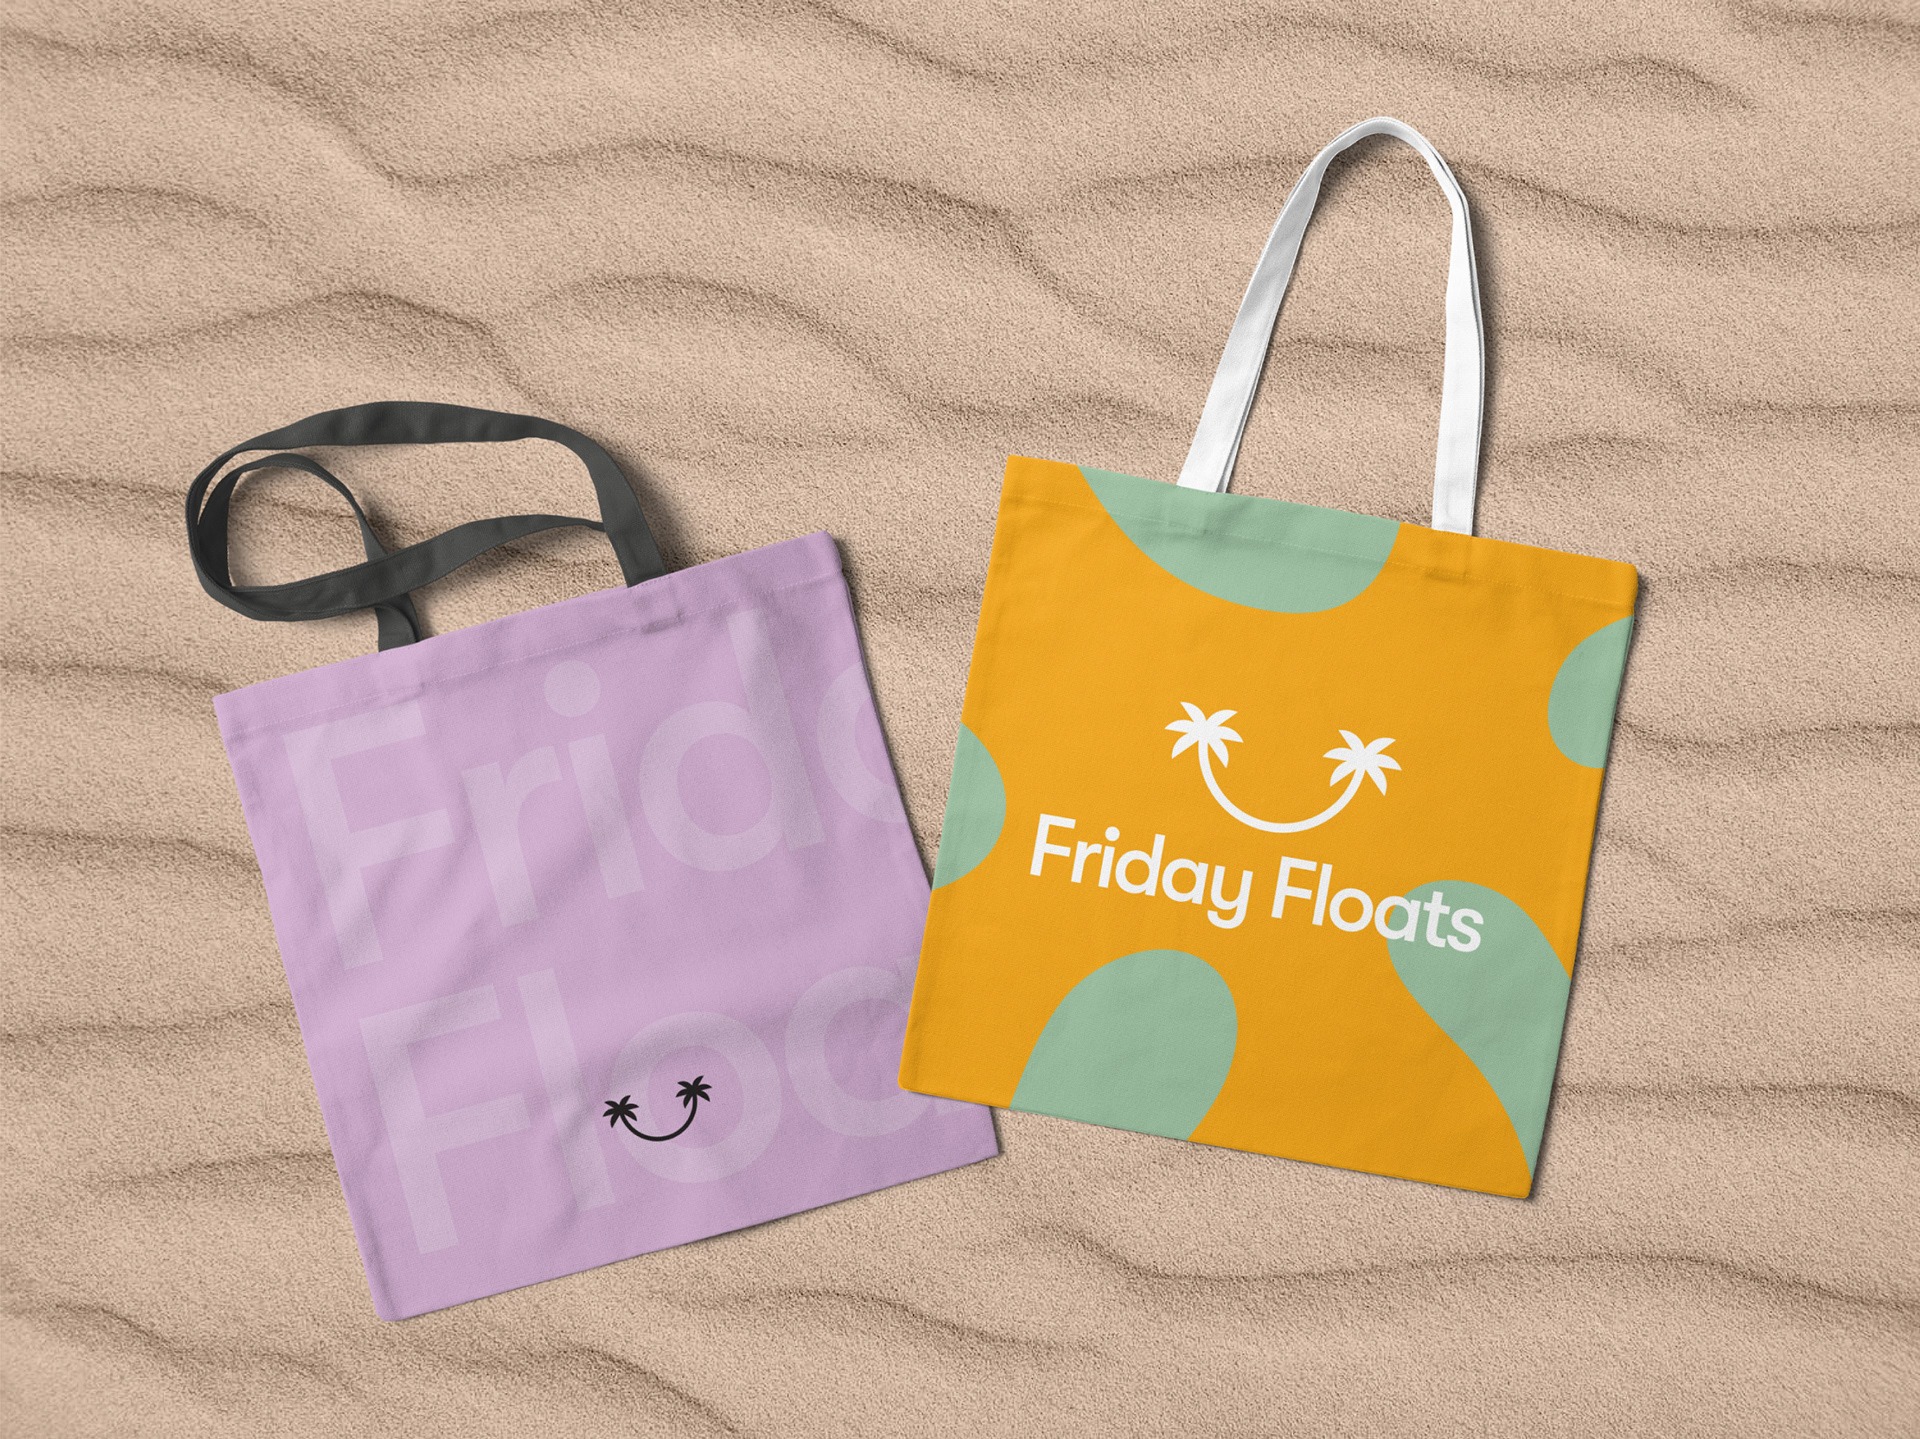 Friday Floats Brand Design